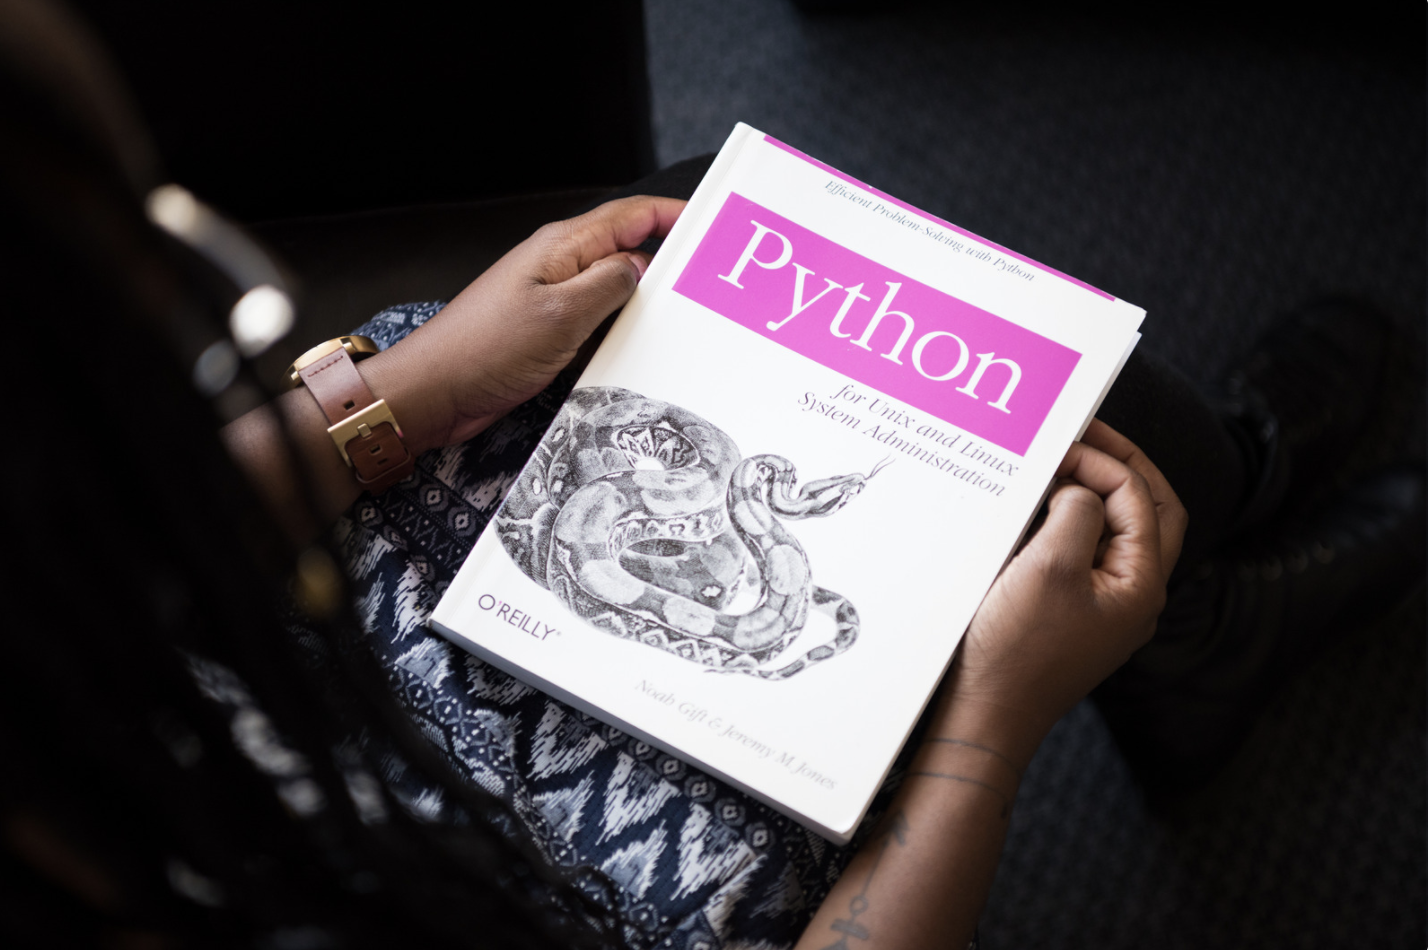 Python with A.I